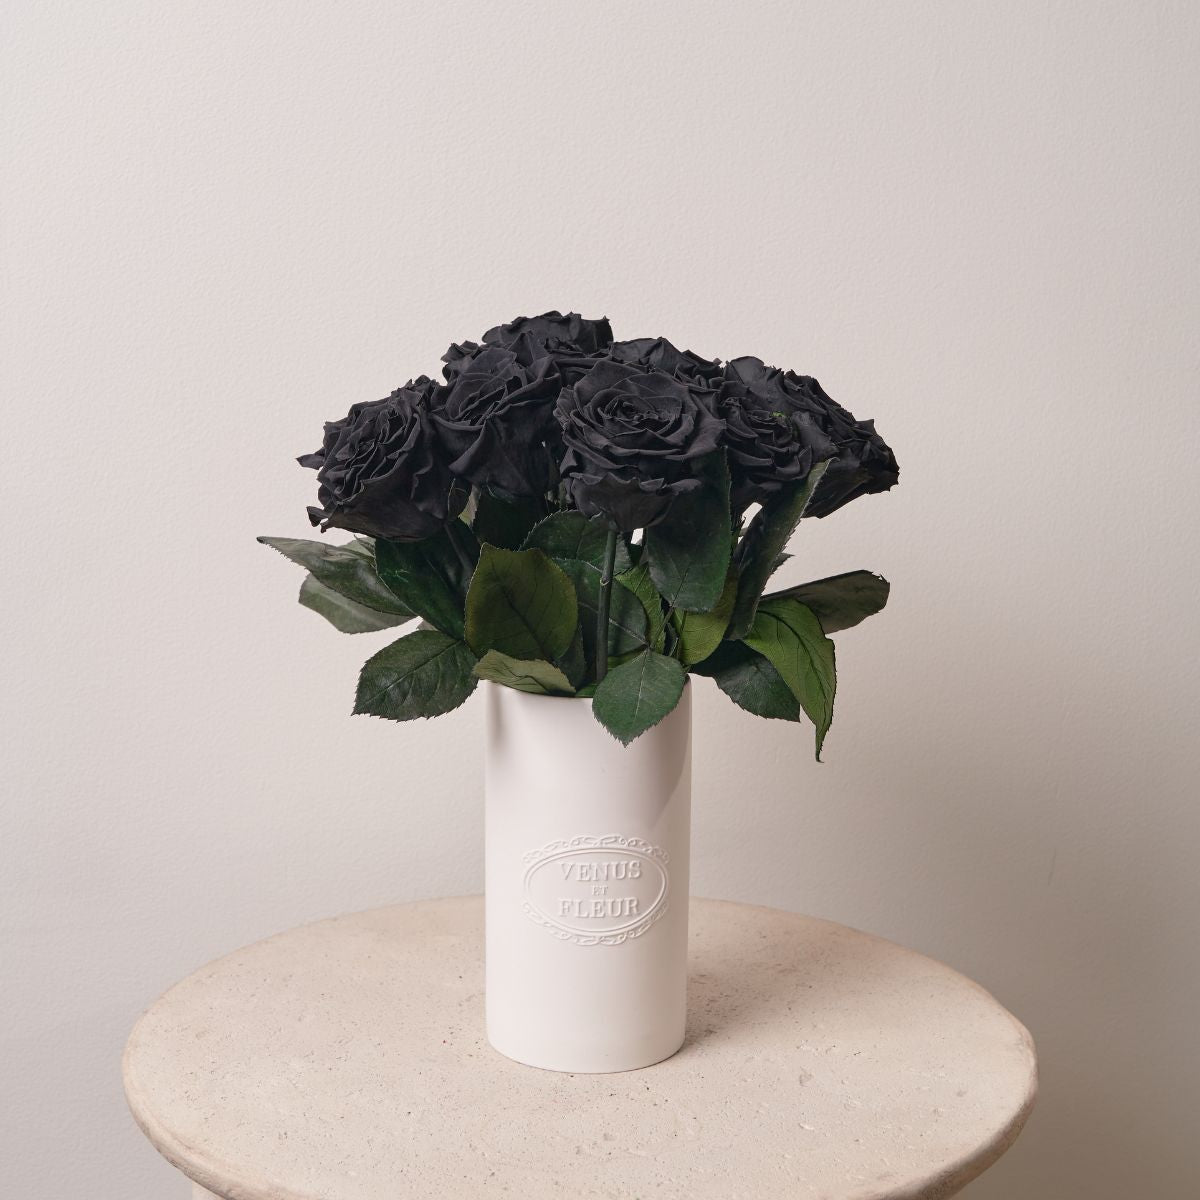 Black Roses Meaning, History, & Gift Guide - Venus et Fleur